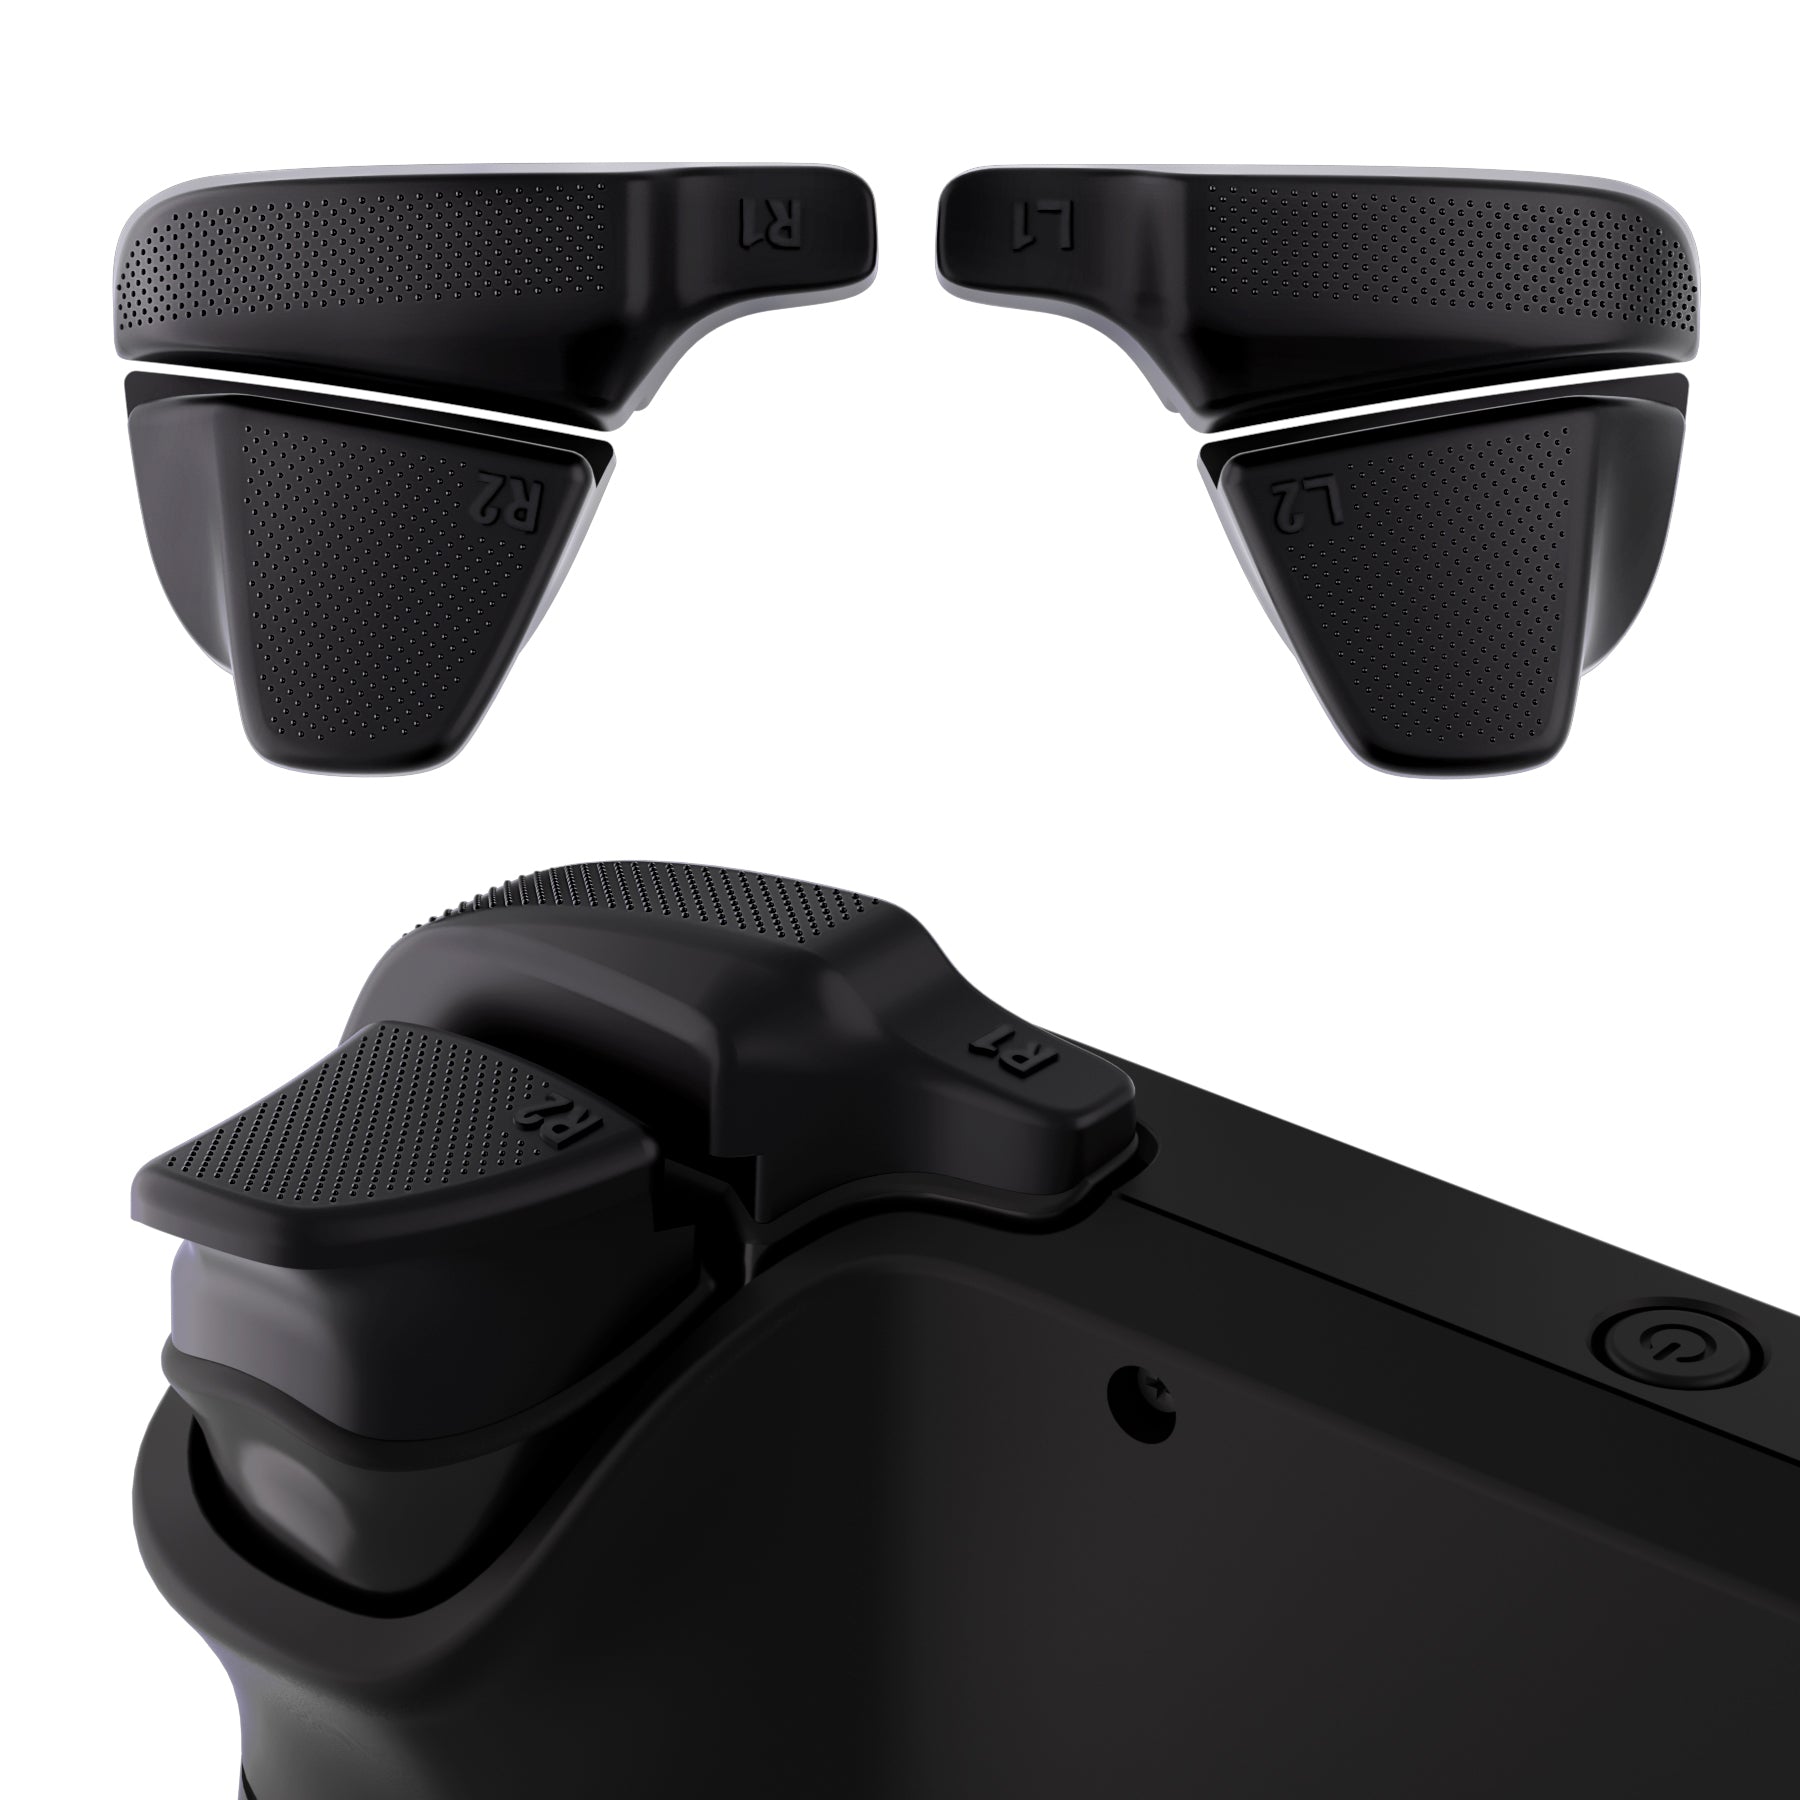 PlayVital LR INCREASER Shoulder Buttons Trigger Enhancement Set for Steam Deck - Black - DJMSDJ001 PlayVital